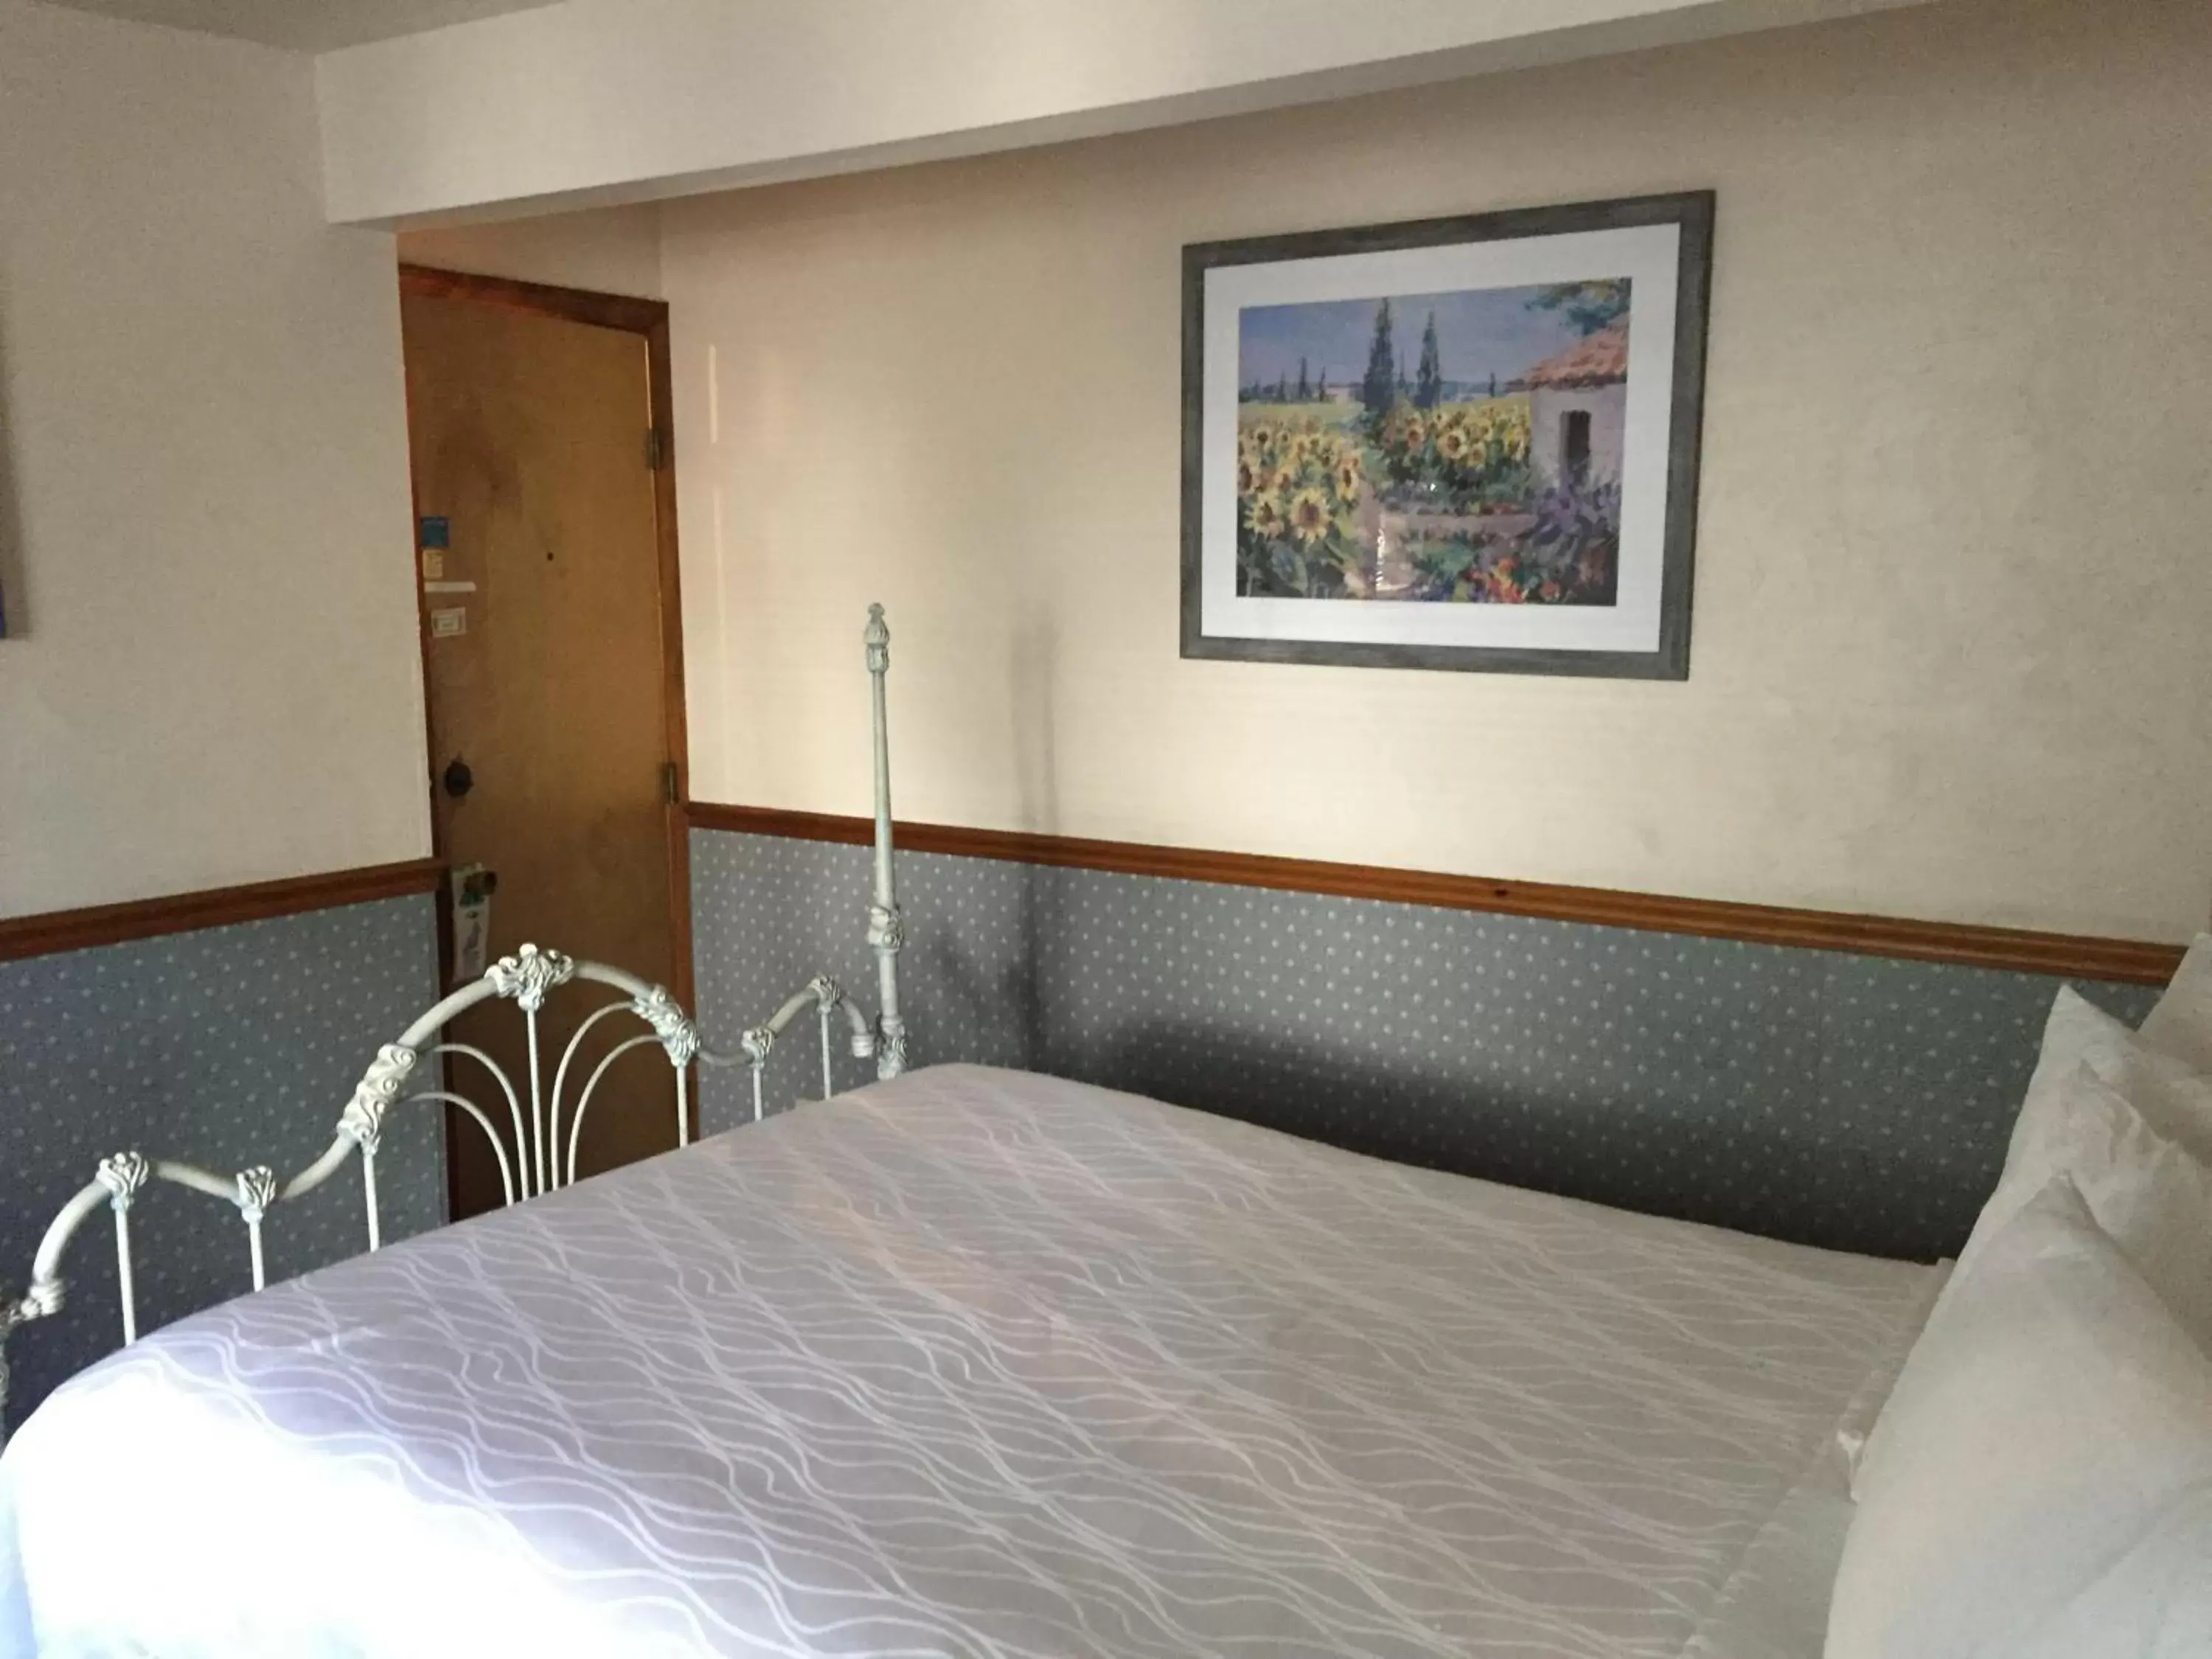 Bed, Room Photo in Catalina Island Seacrest Inn